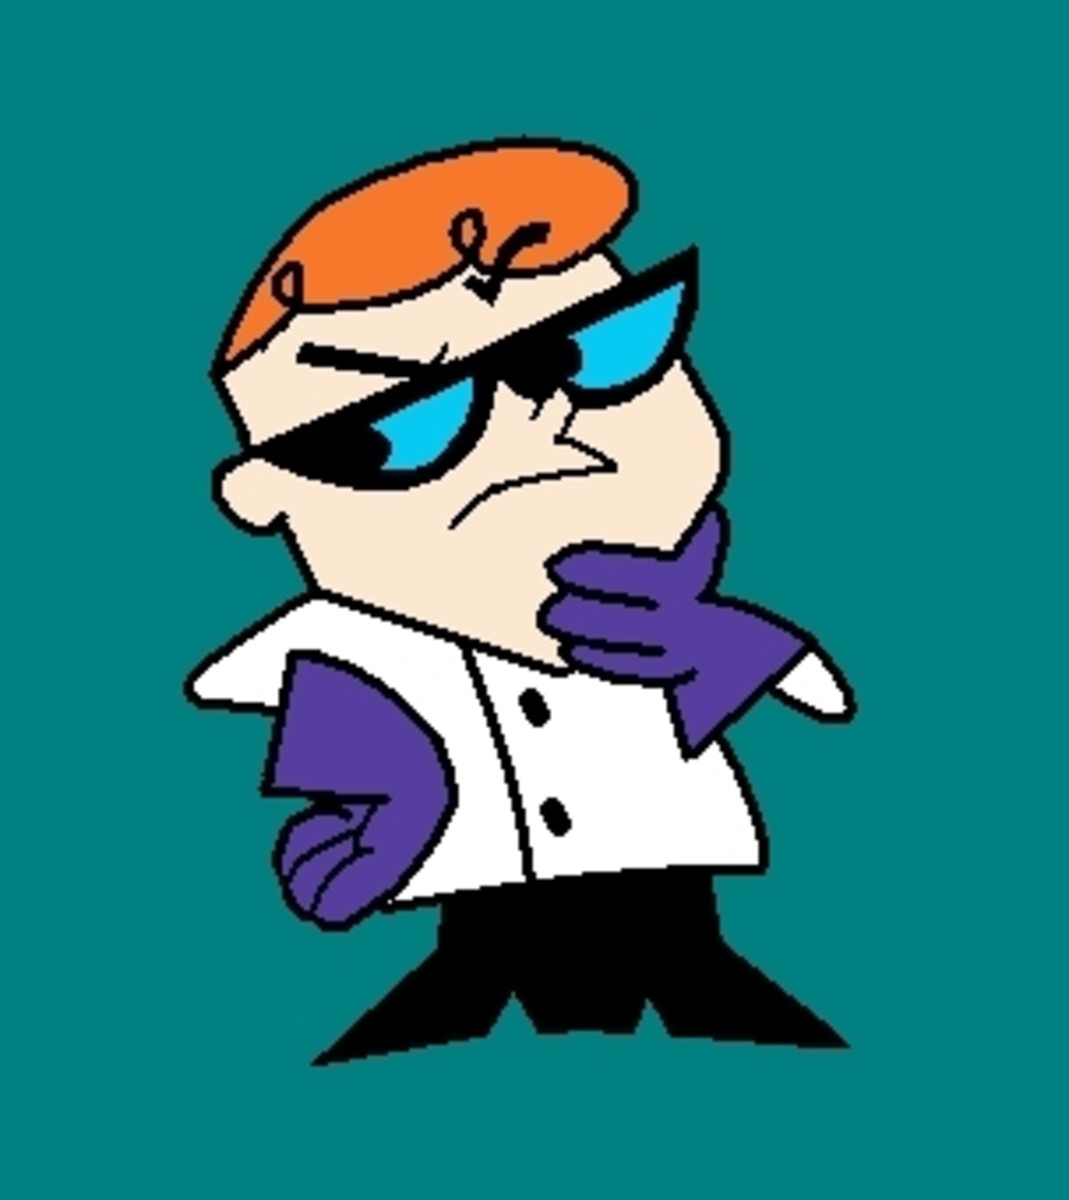 Dexter from Dexter's Laboratory